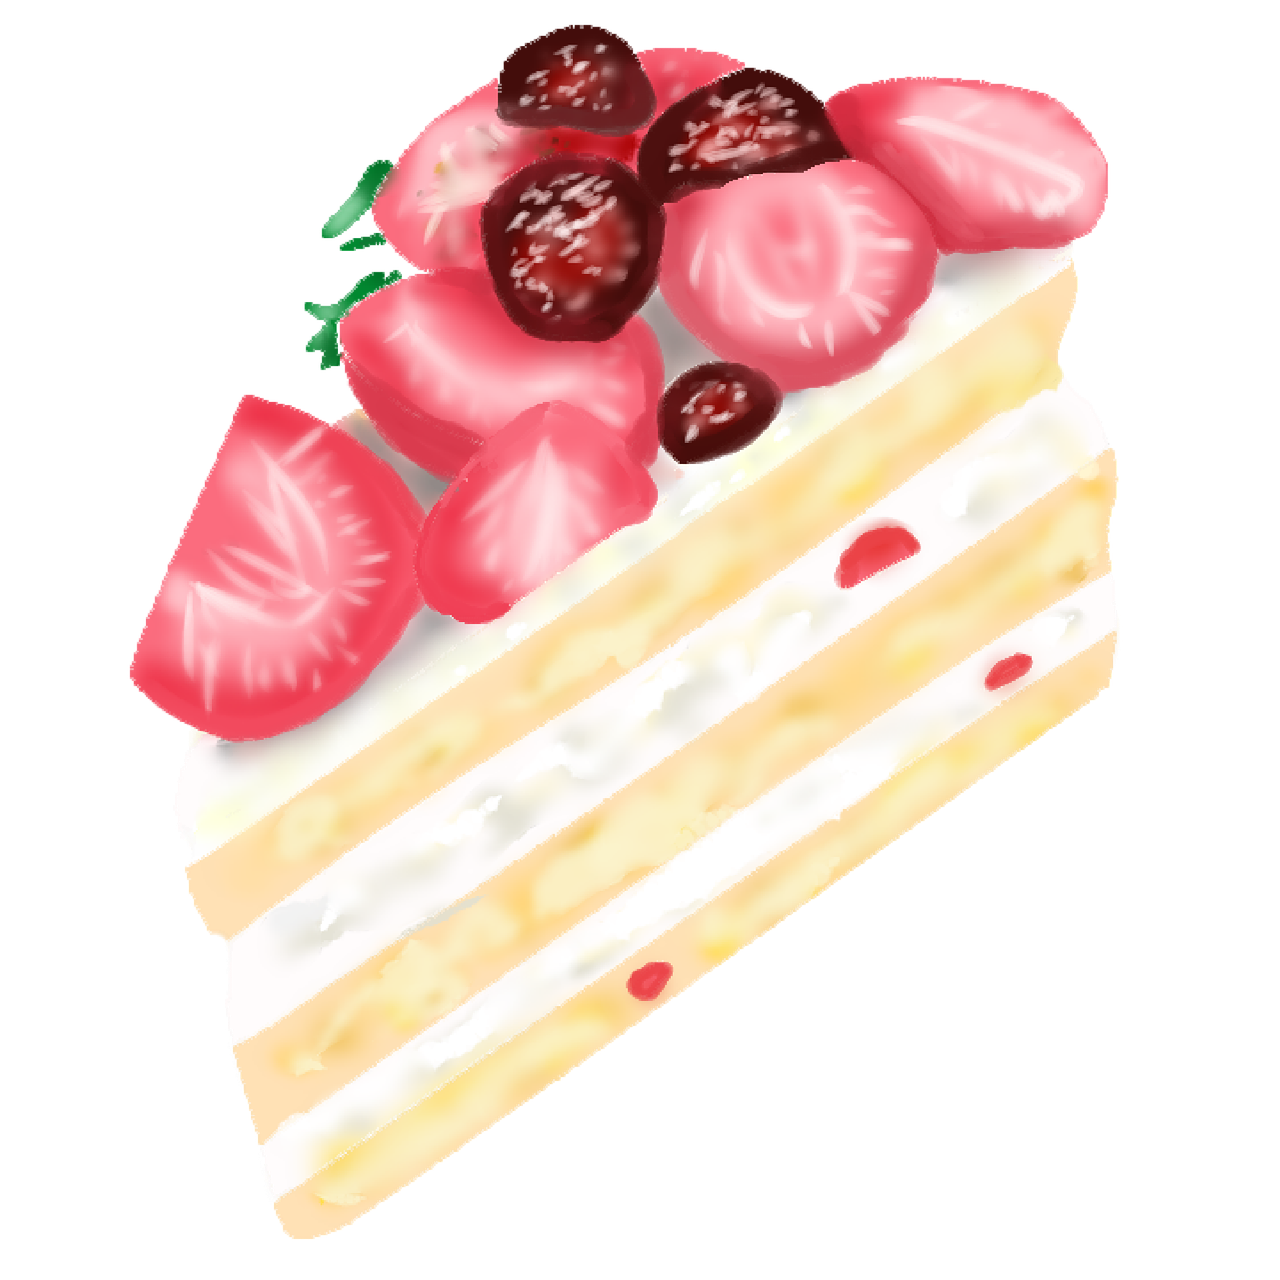 dessert cake strawberry free photo